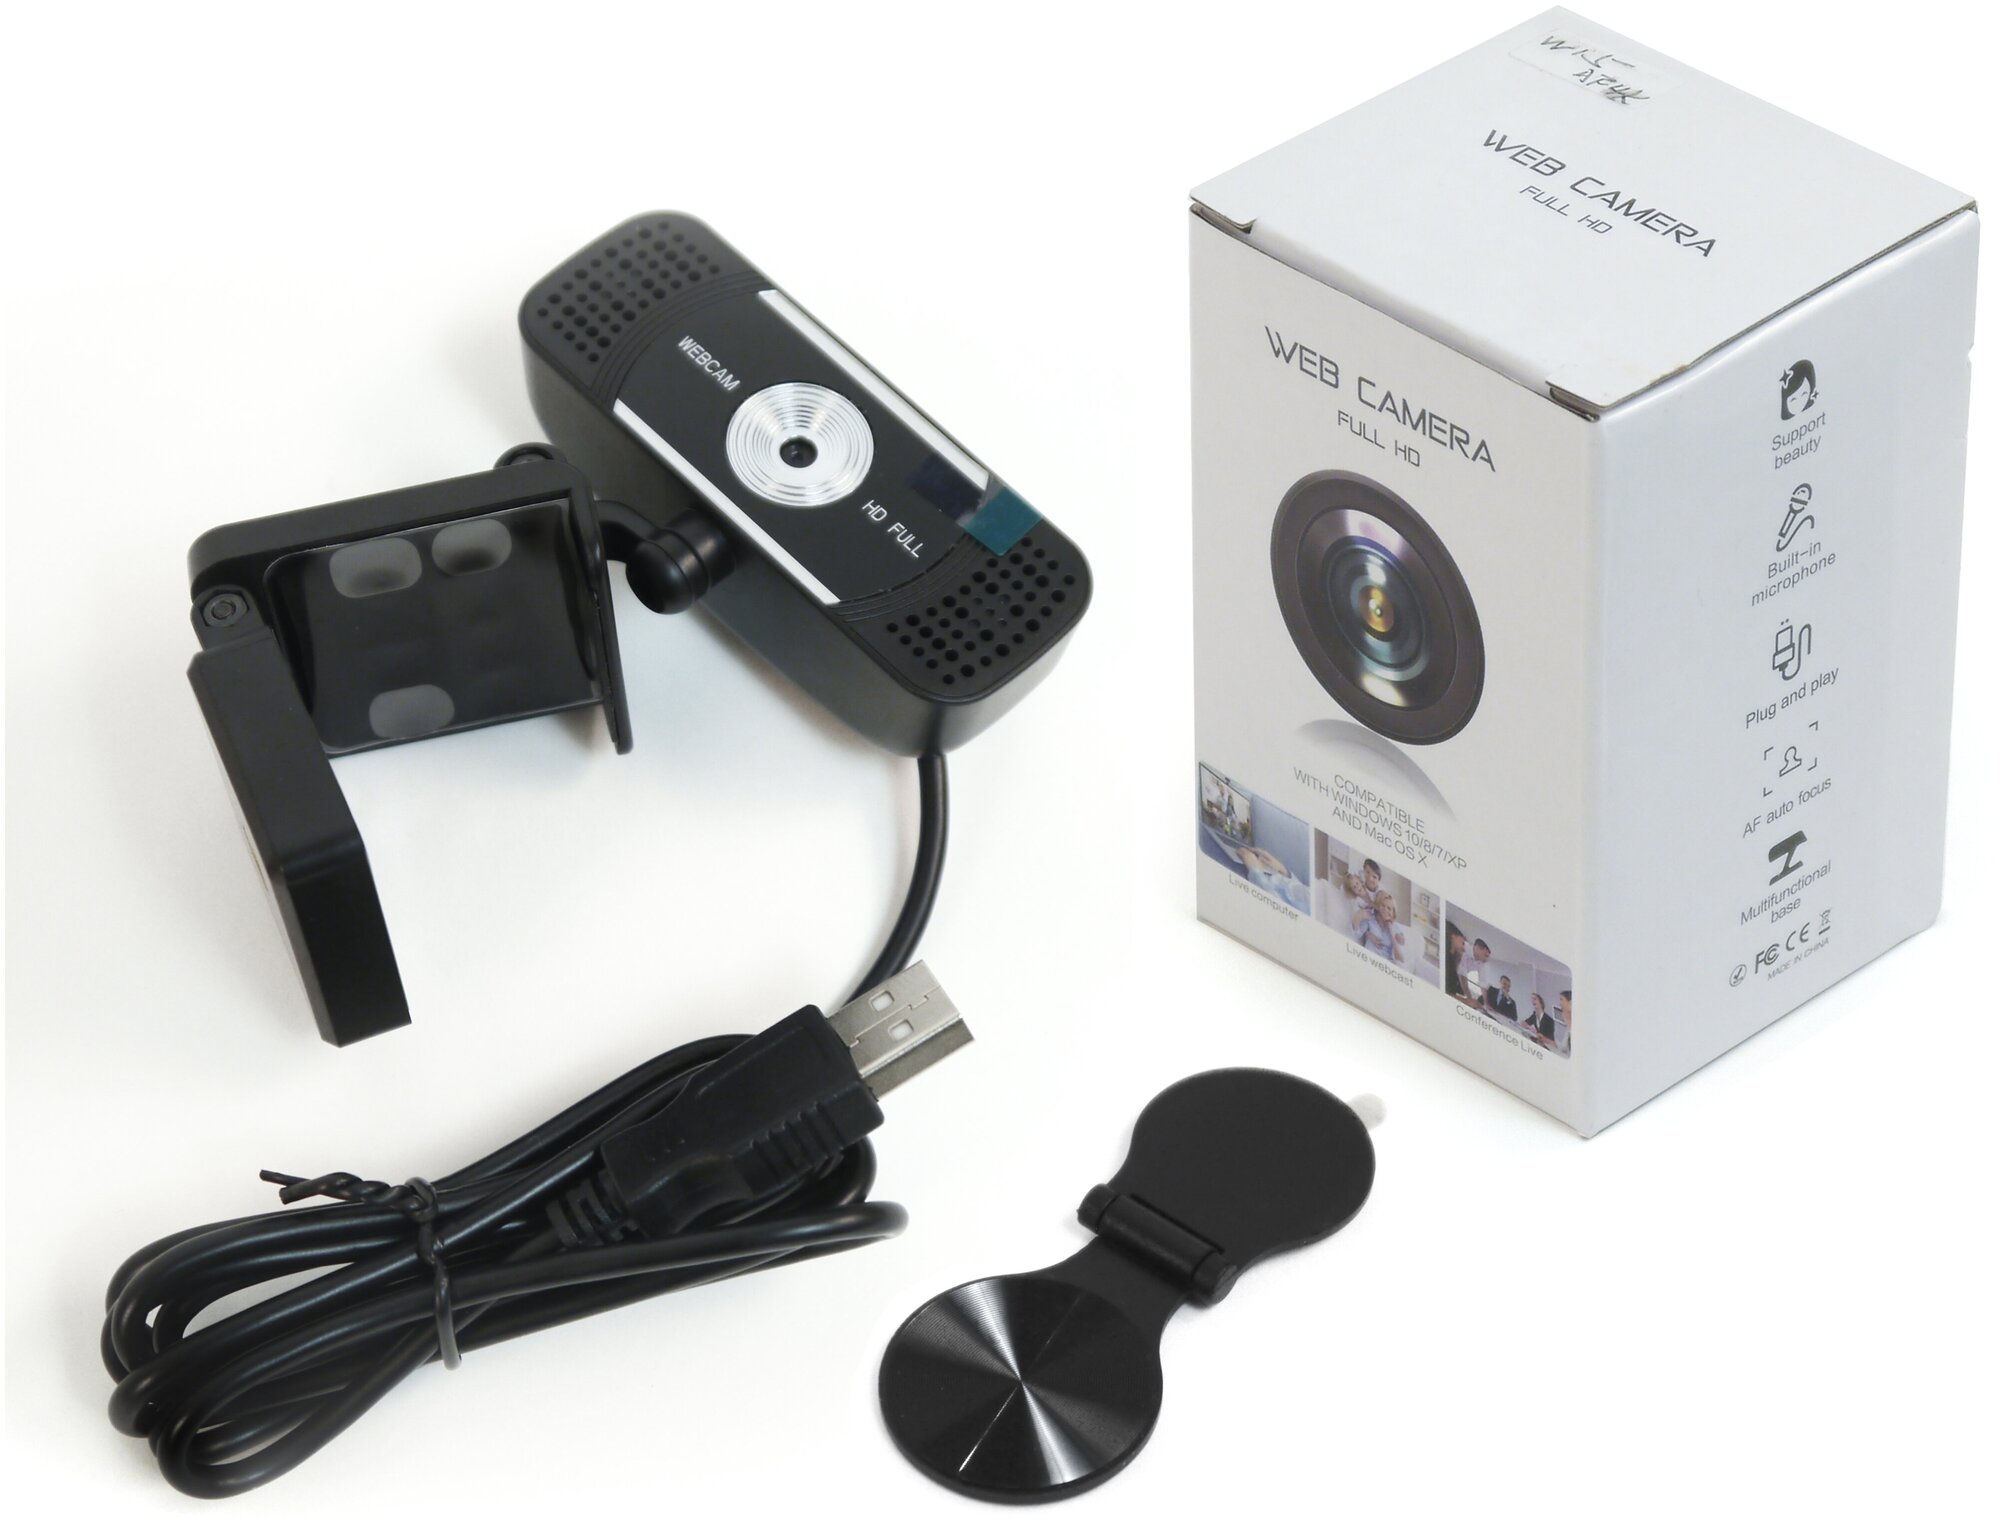 Веб камера 2K Full HD для пк HDcom Zoom W18-2K - бюджетные веб камеры для стрима. Для работы в Skype, Zoom и WhatsApp